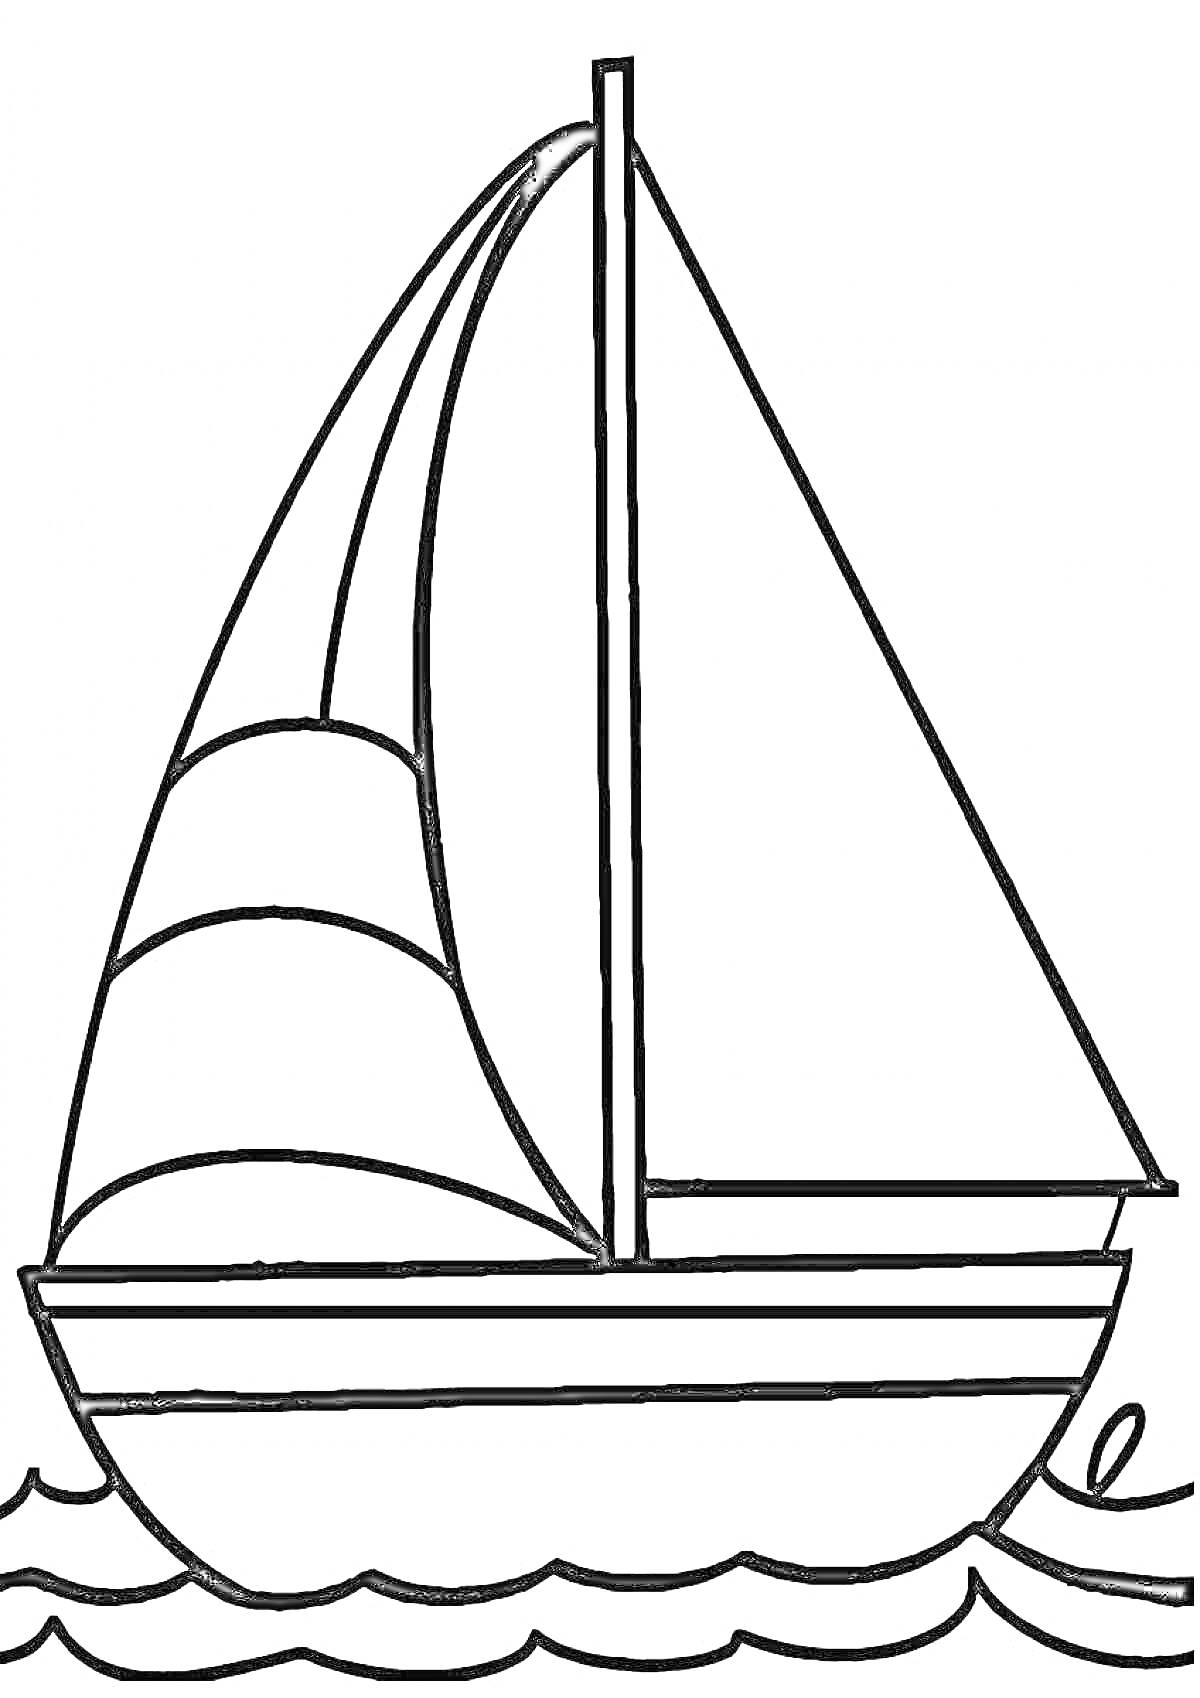 Раскраска Парусник на волнах с двумя парусами